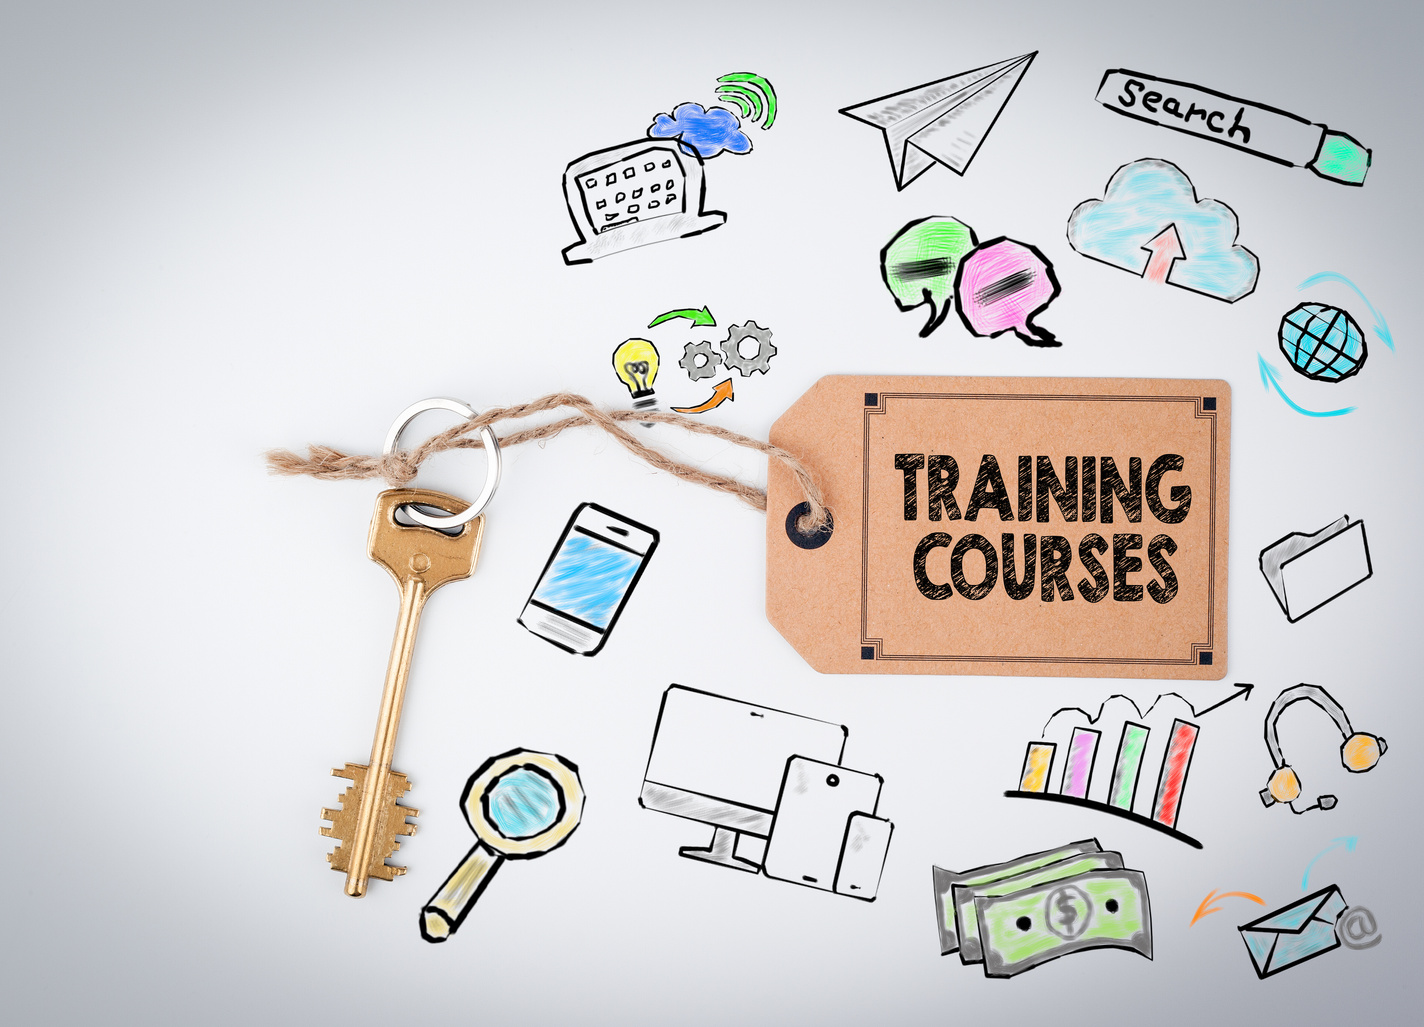 Training Courses. Key on a white background